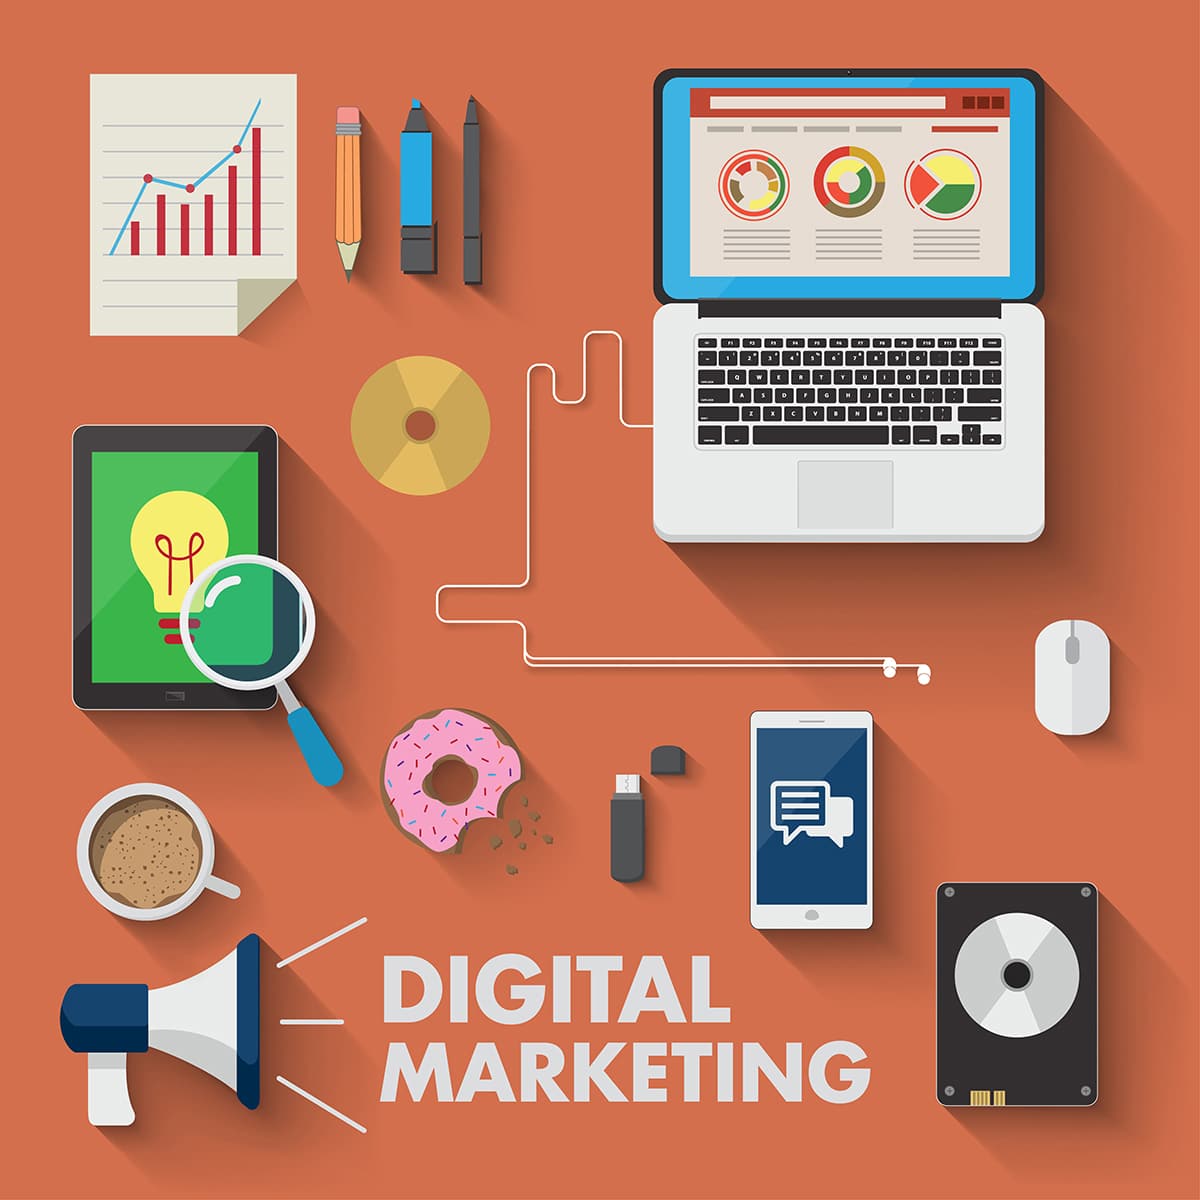 Digital Marketing Success